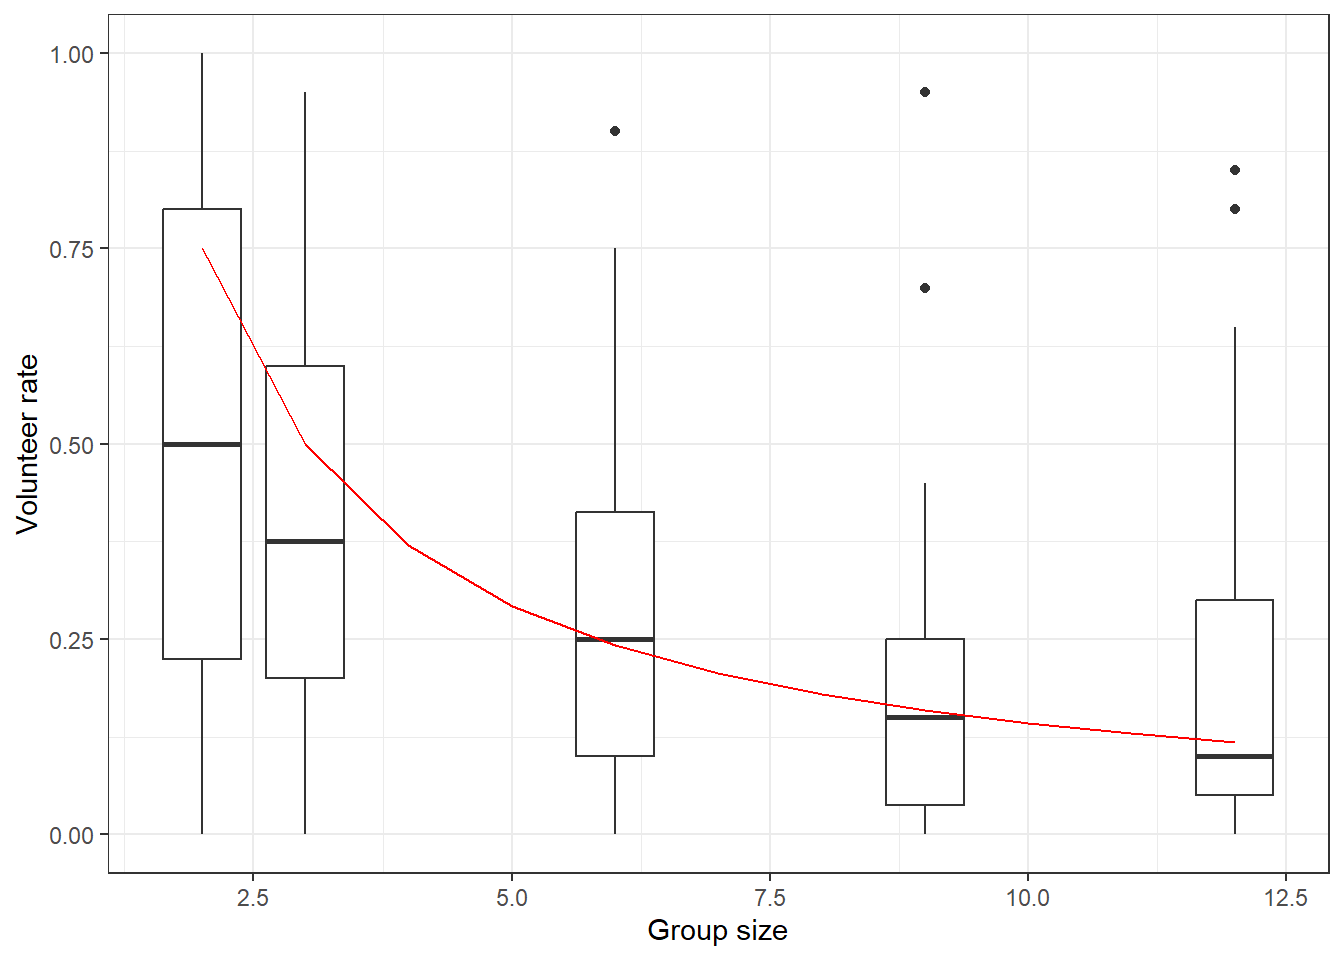 Nash prediction (red line) and participant-specific volunteer rates (black box plots)